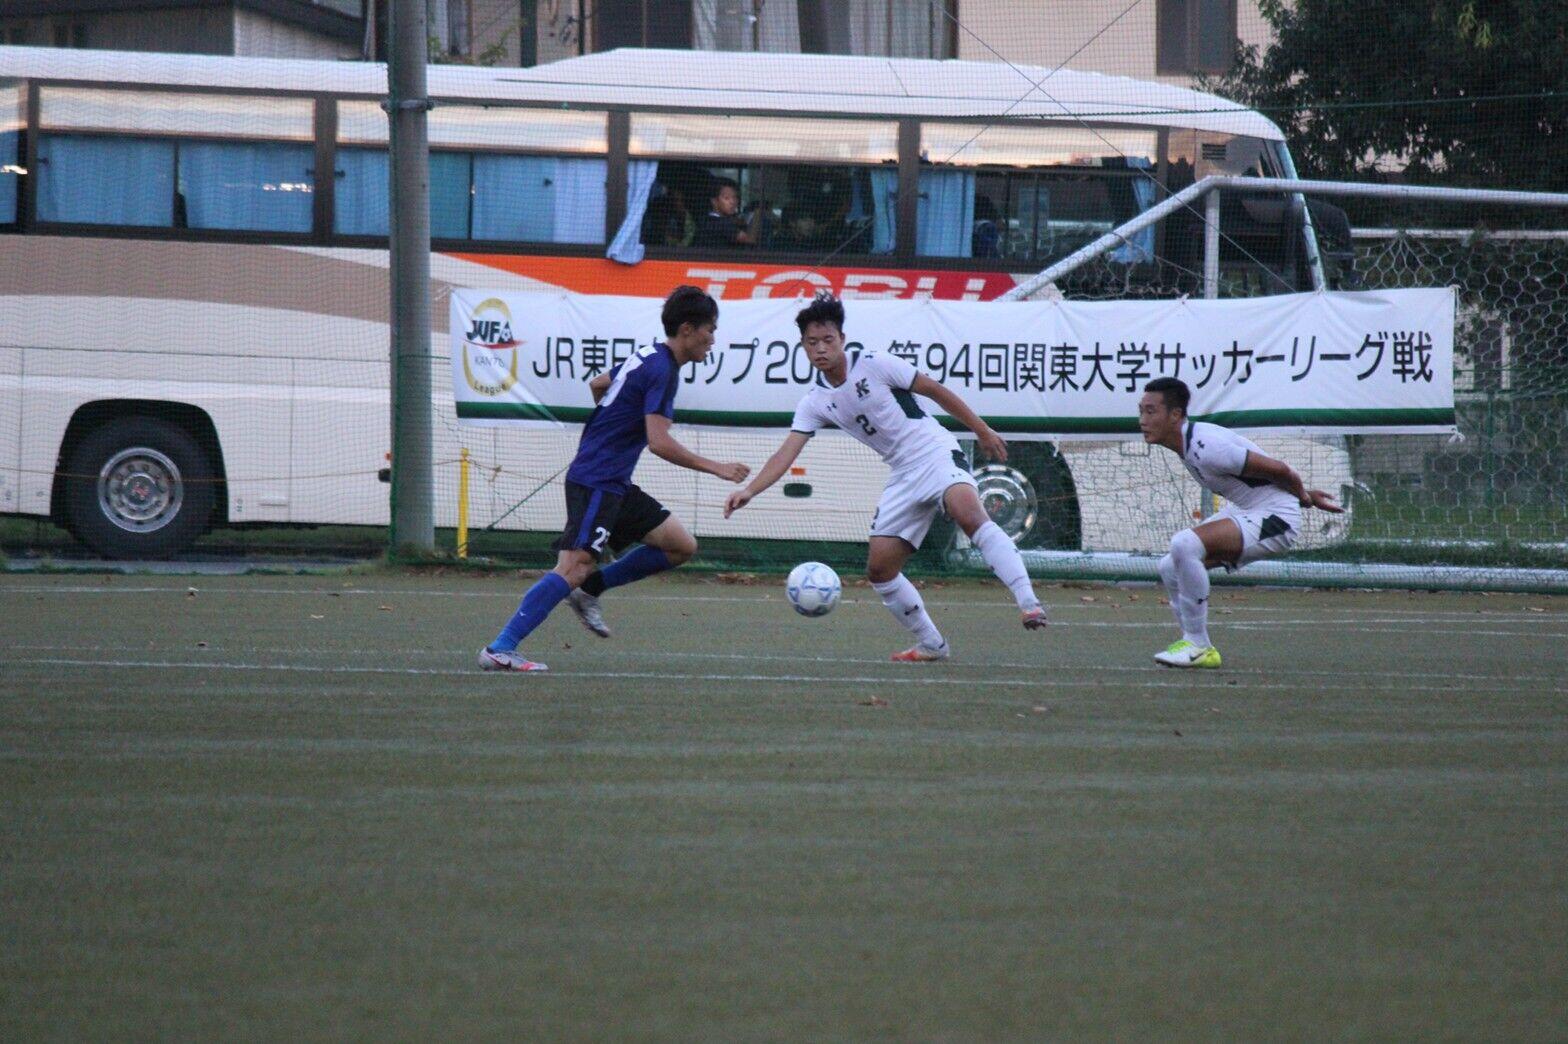 https://football.ku-sports.jp/blog/photoreport/images/20200831142953.jpg